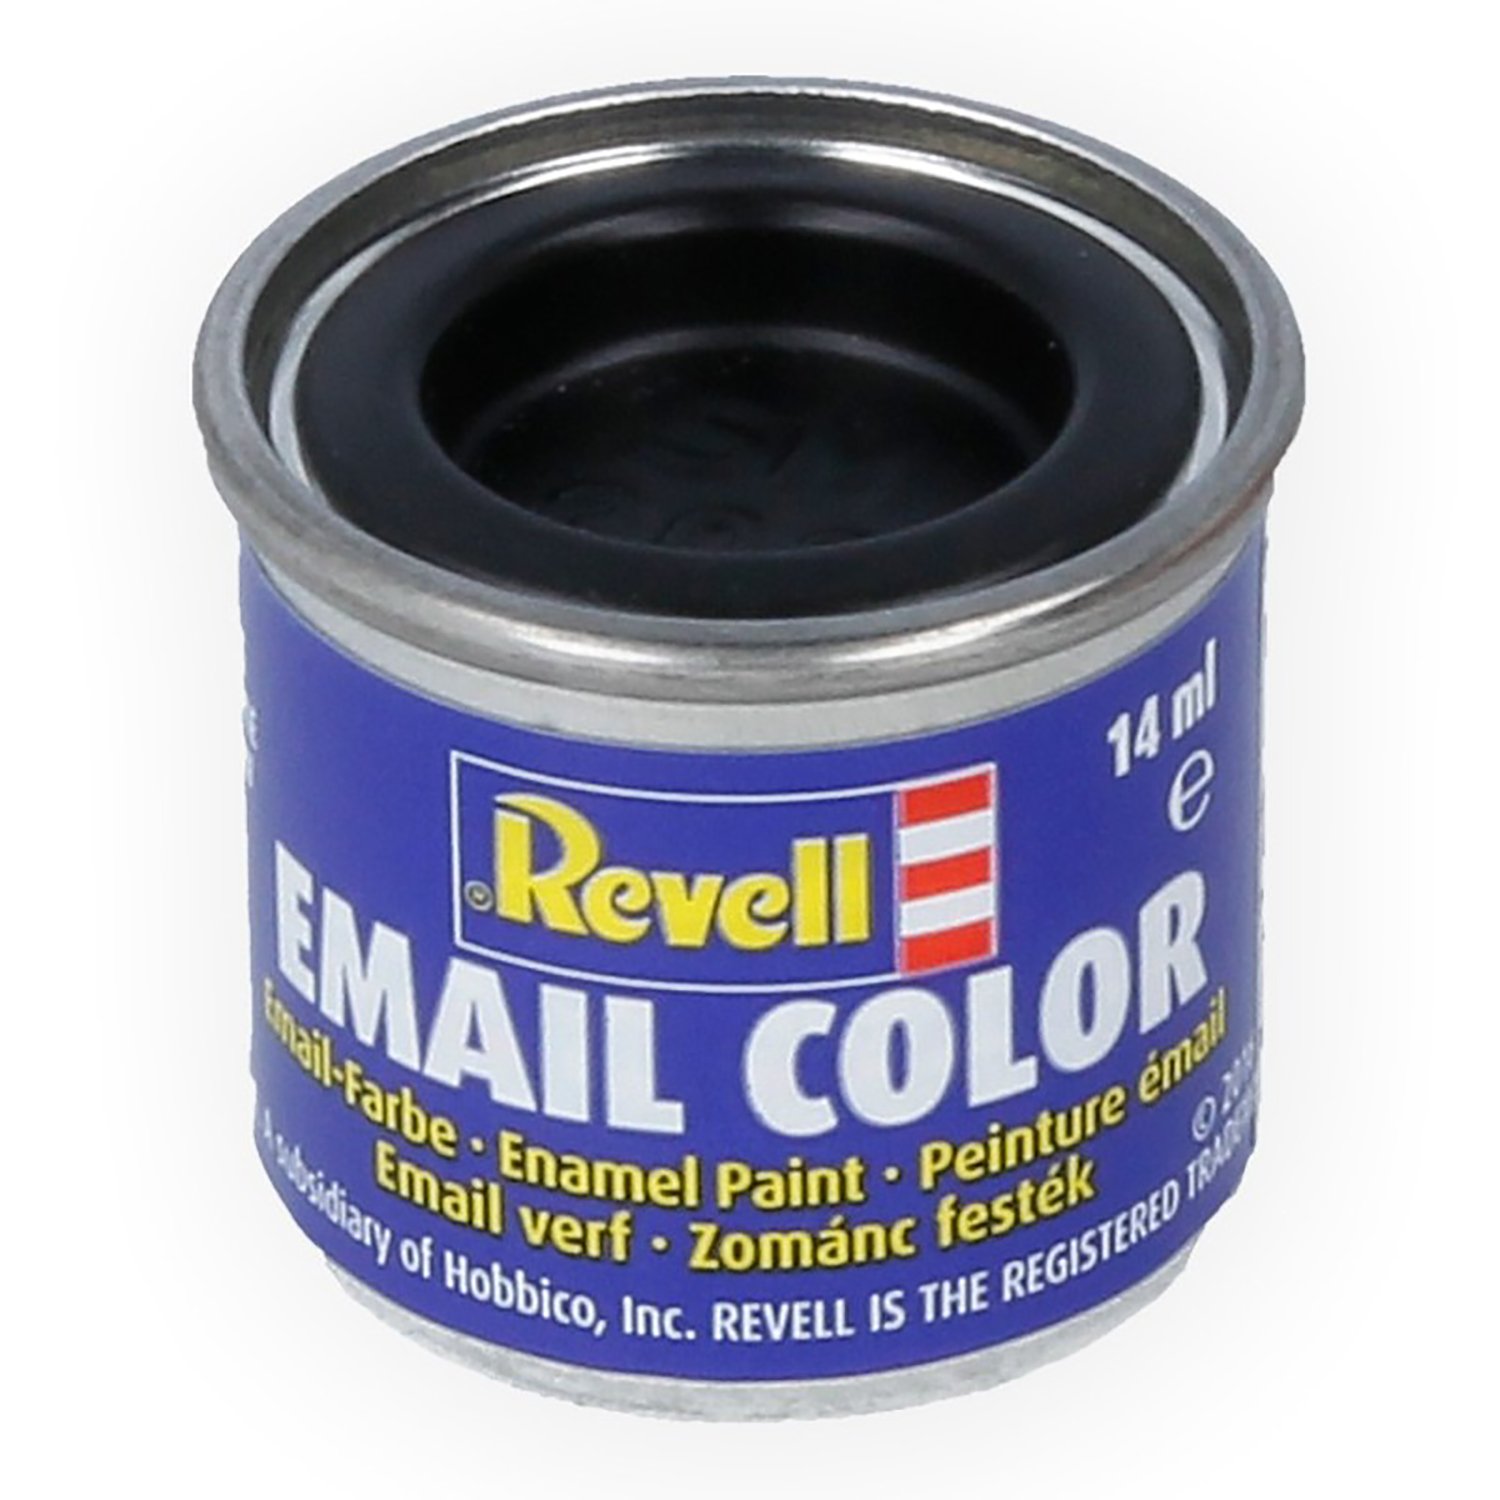 Краска плачу. Ревелл эмаль 42. Revell Аква-краска черно-серая, матовая. Revell чёрная краска. Шелково матовая краска Ревелл.